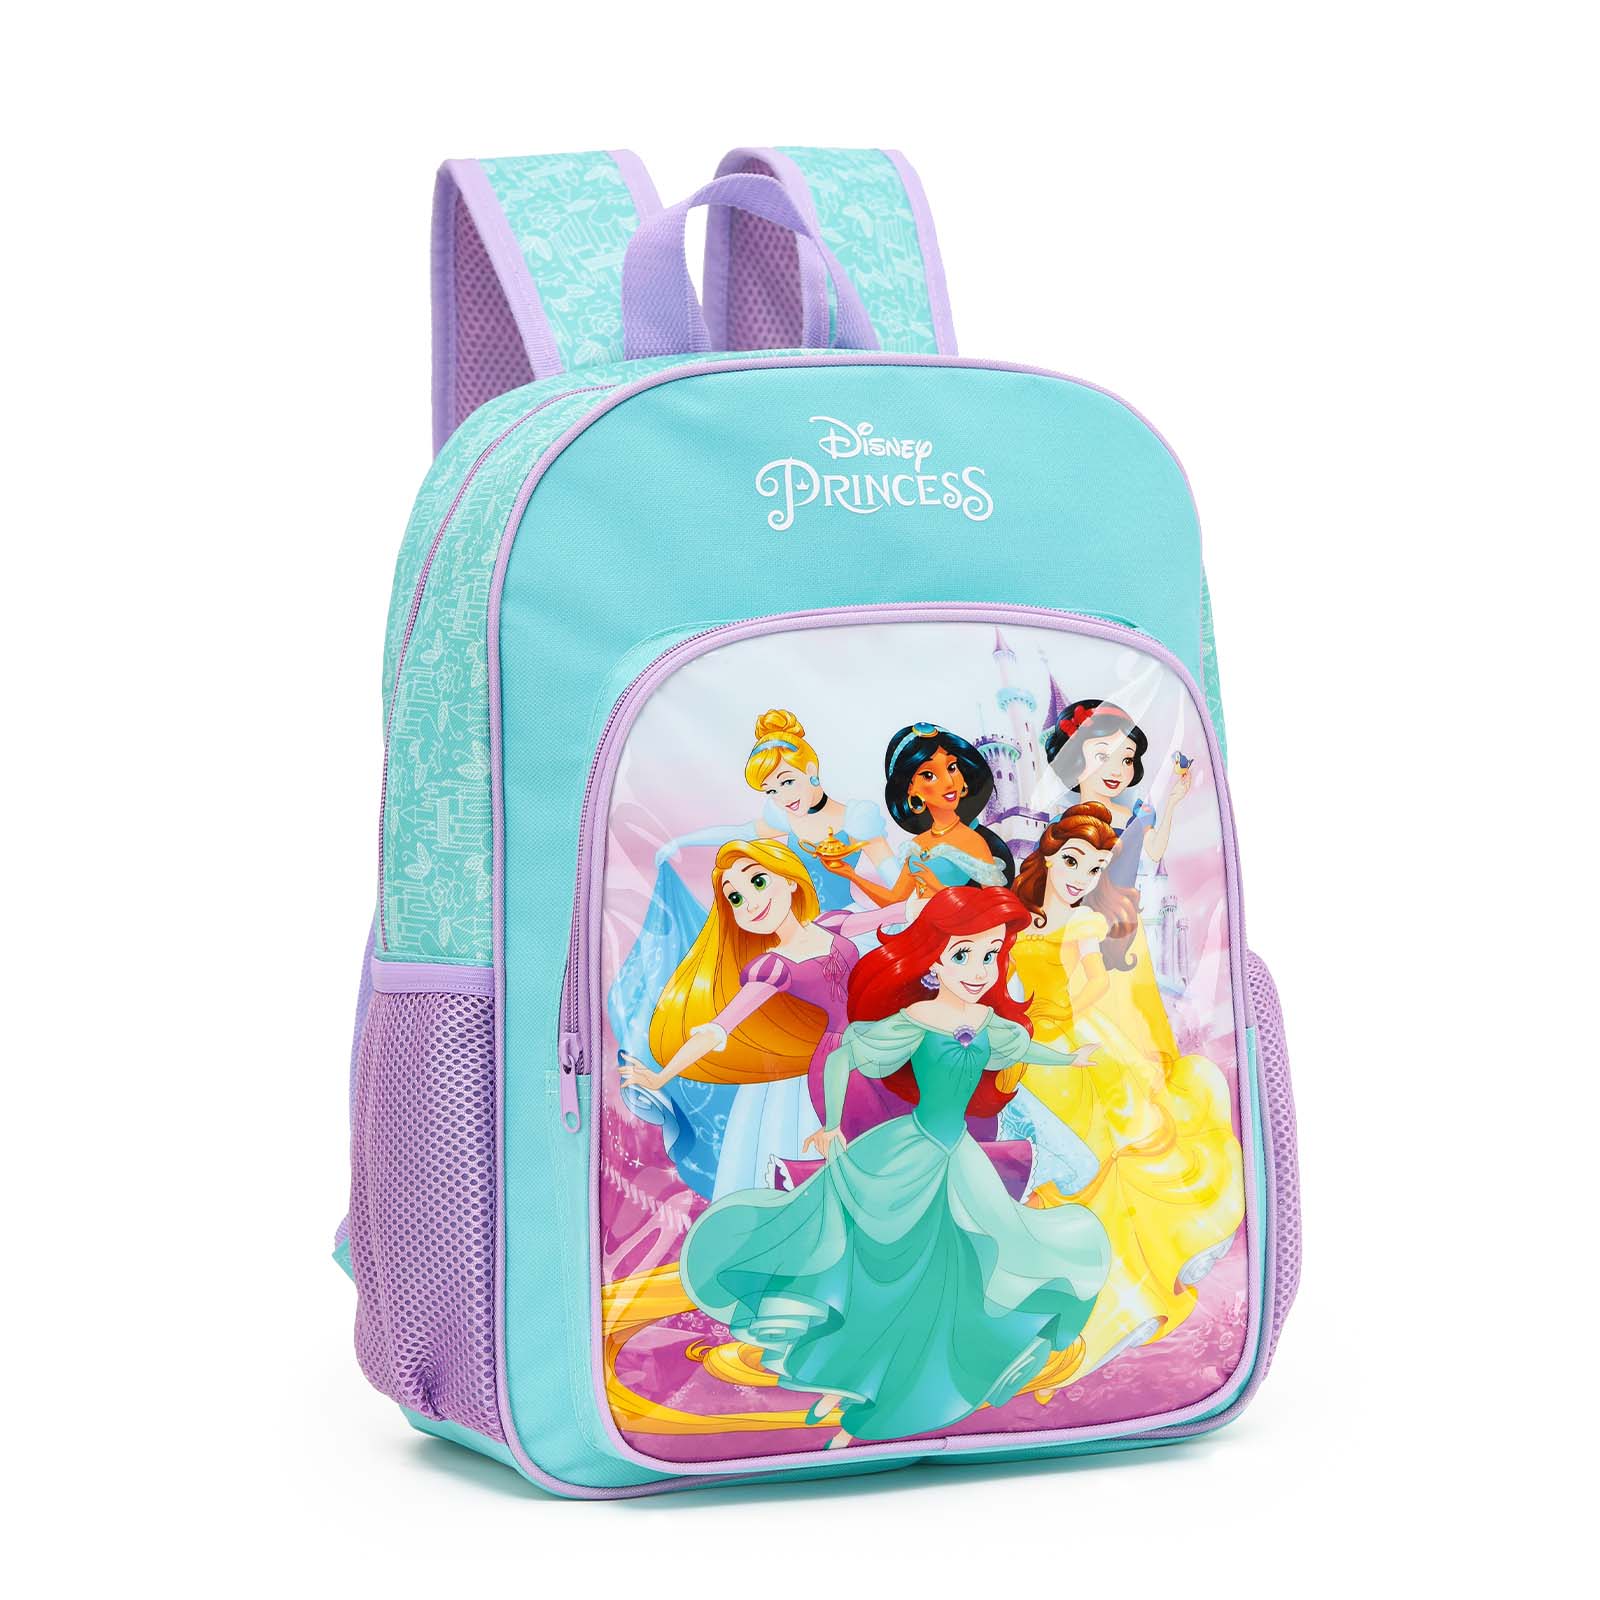     disney-princess-16inch-backpack-front.jpg